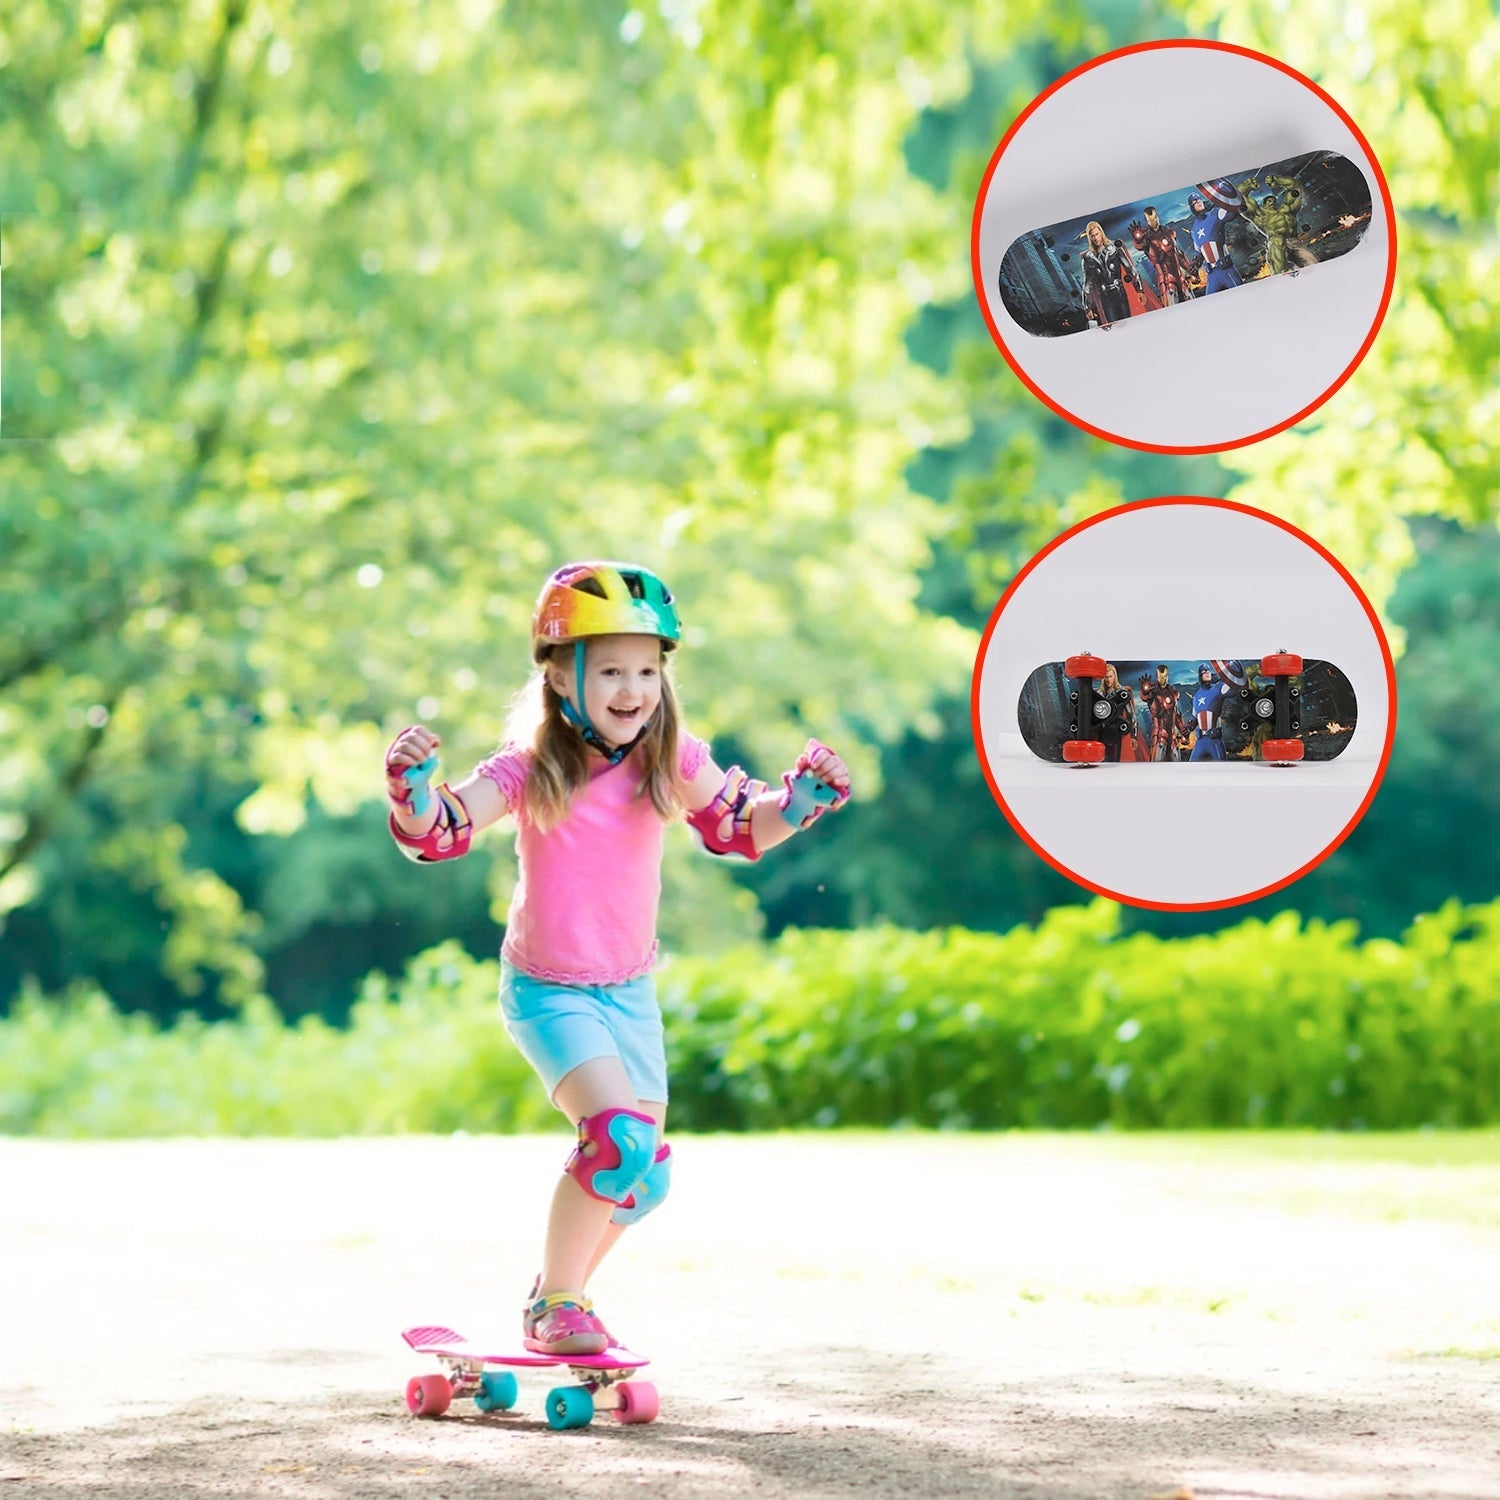 8042 Wood Skateboard Skating Board Lightweight Board Cool Skate Board for Beginner/Kids/Teens/Adult and Return Gift Item DeoDap